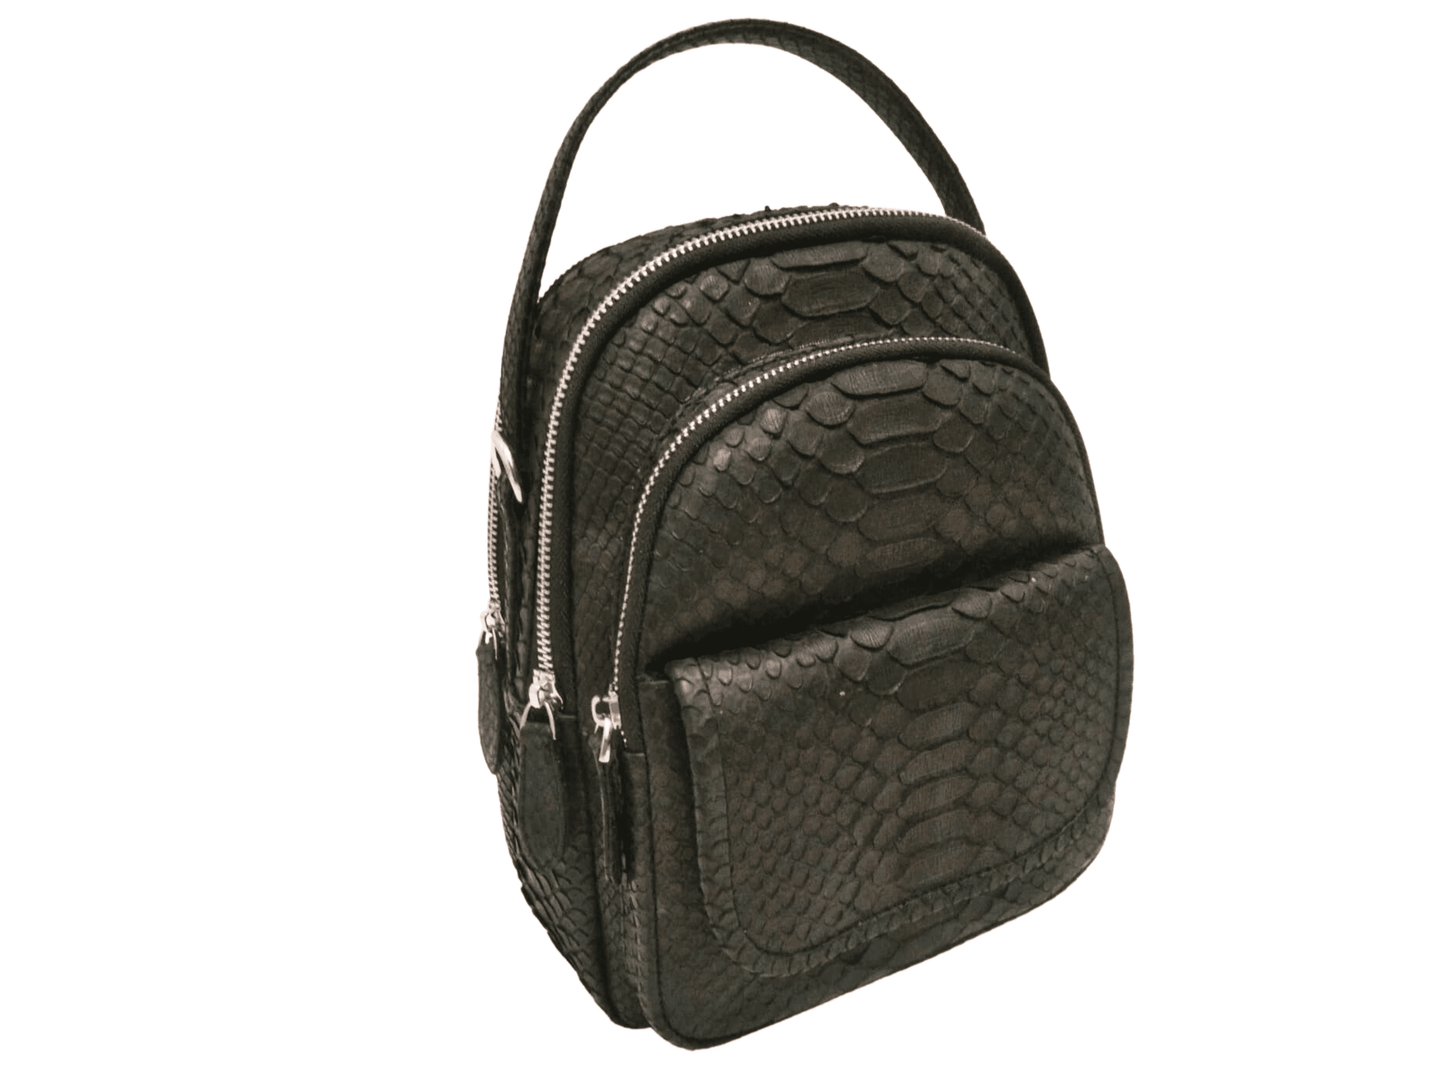 Genuine Snakeskin Leather Backpack Purse for Women Python Jacket by LFM Fashion